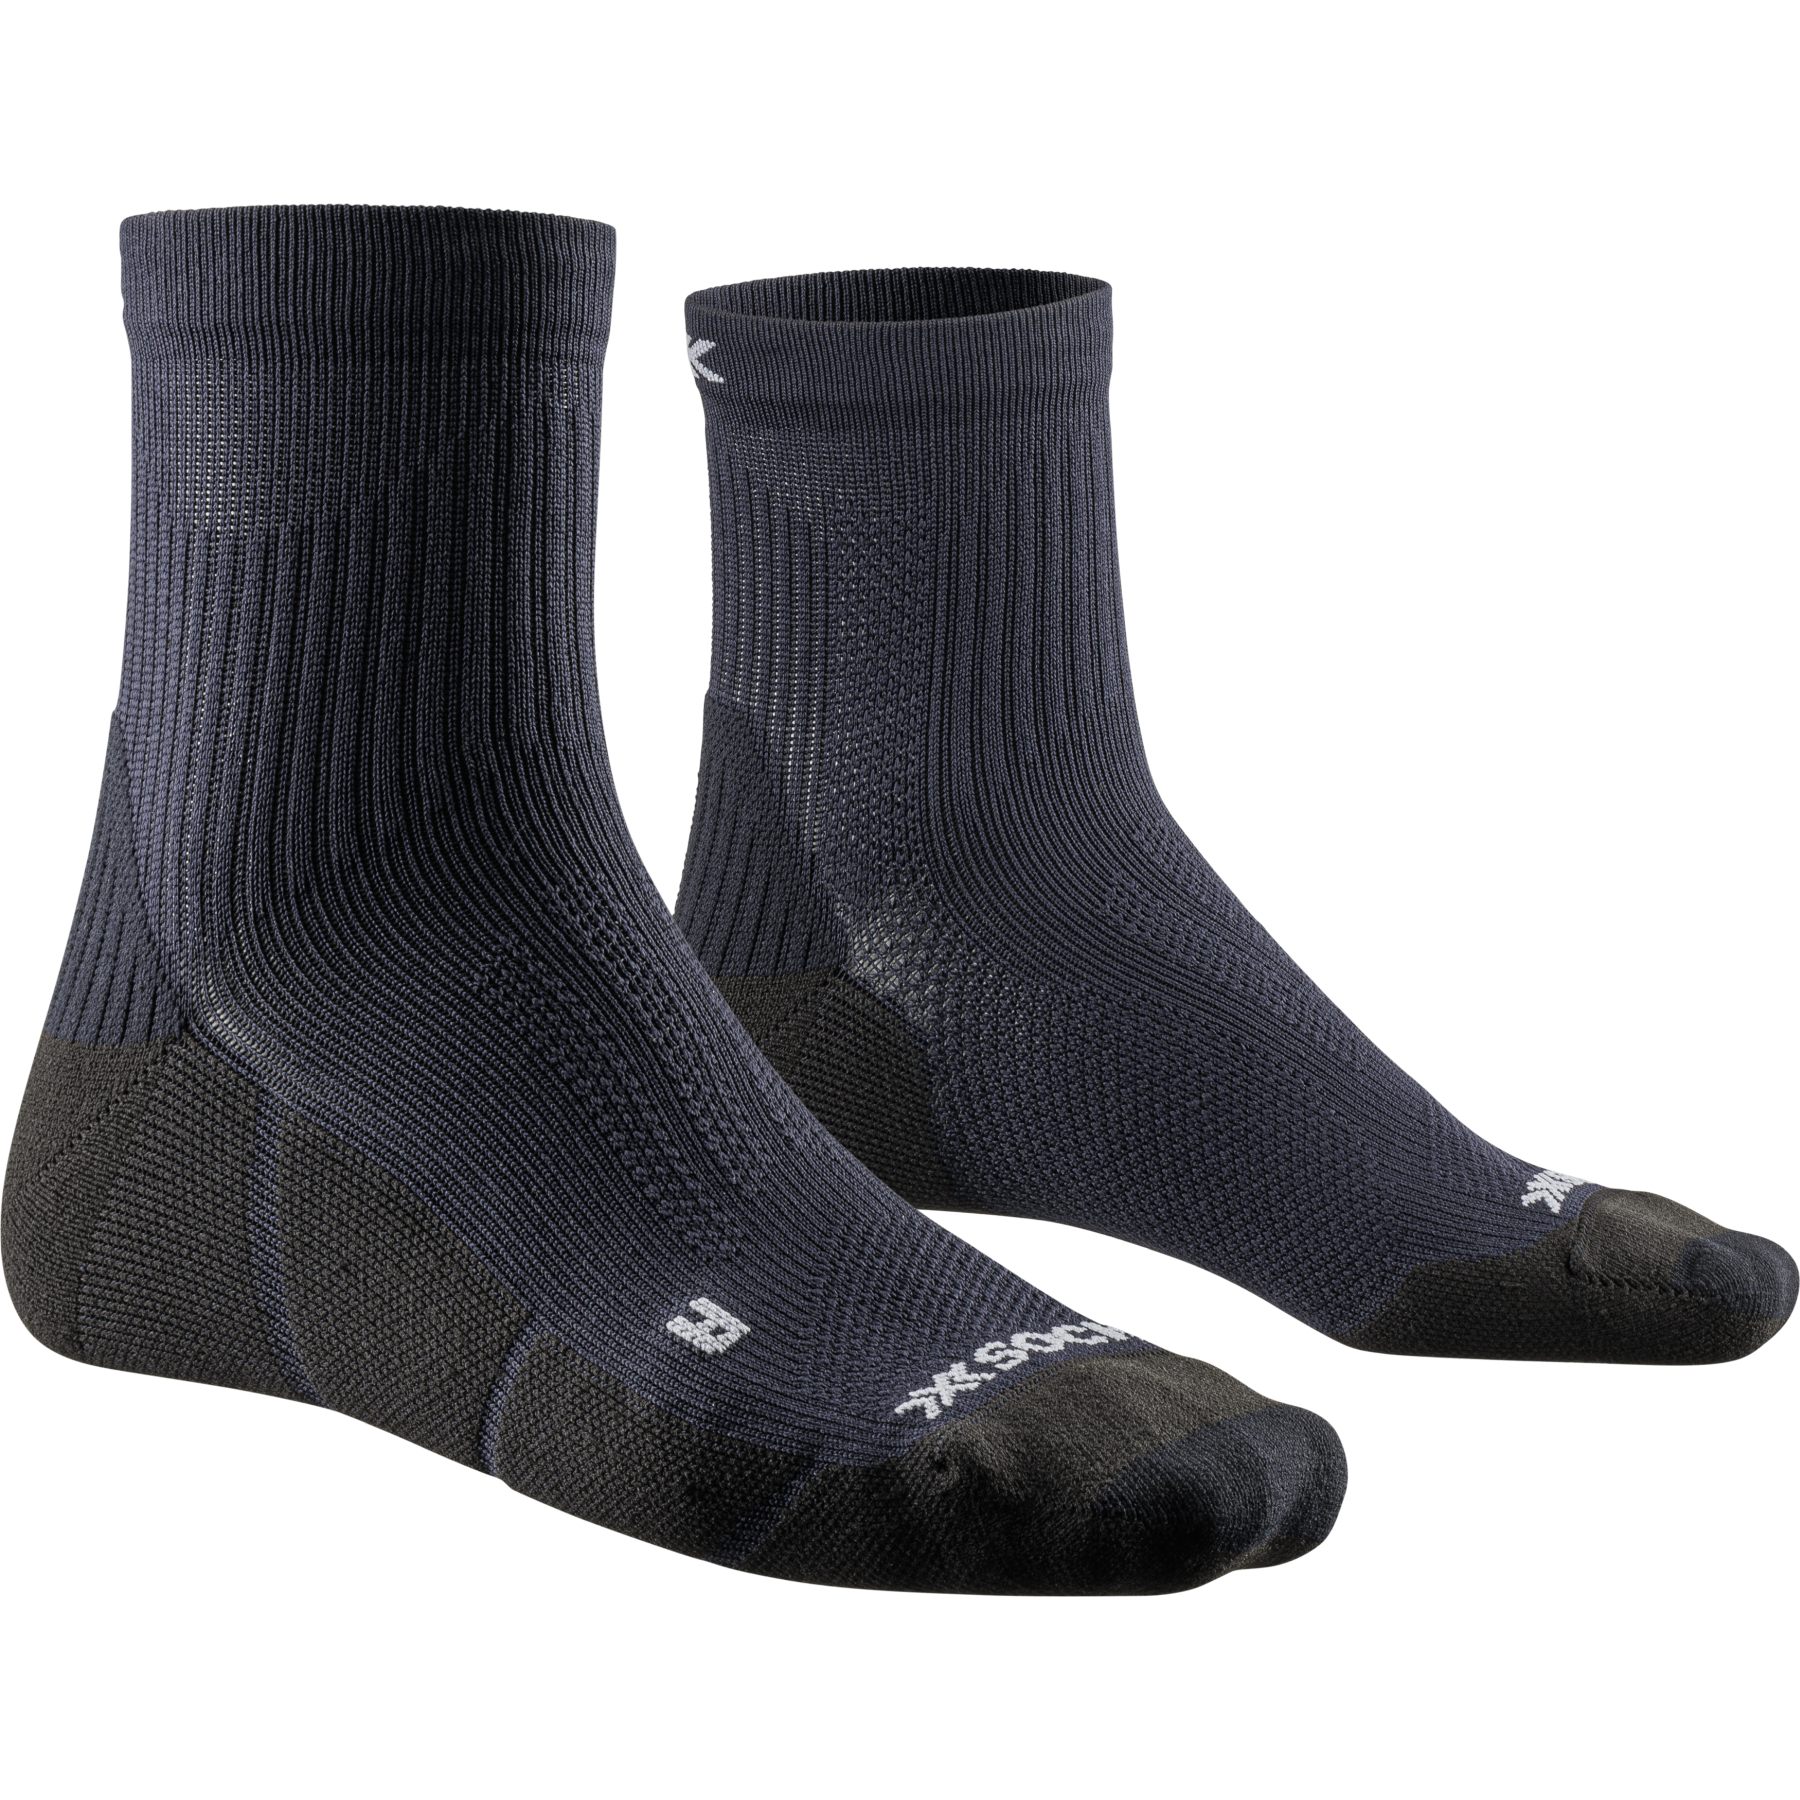 Productfoto van X-Socks Core Sport Ankle Sokken - opal black/arctic white